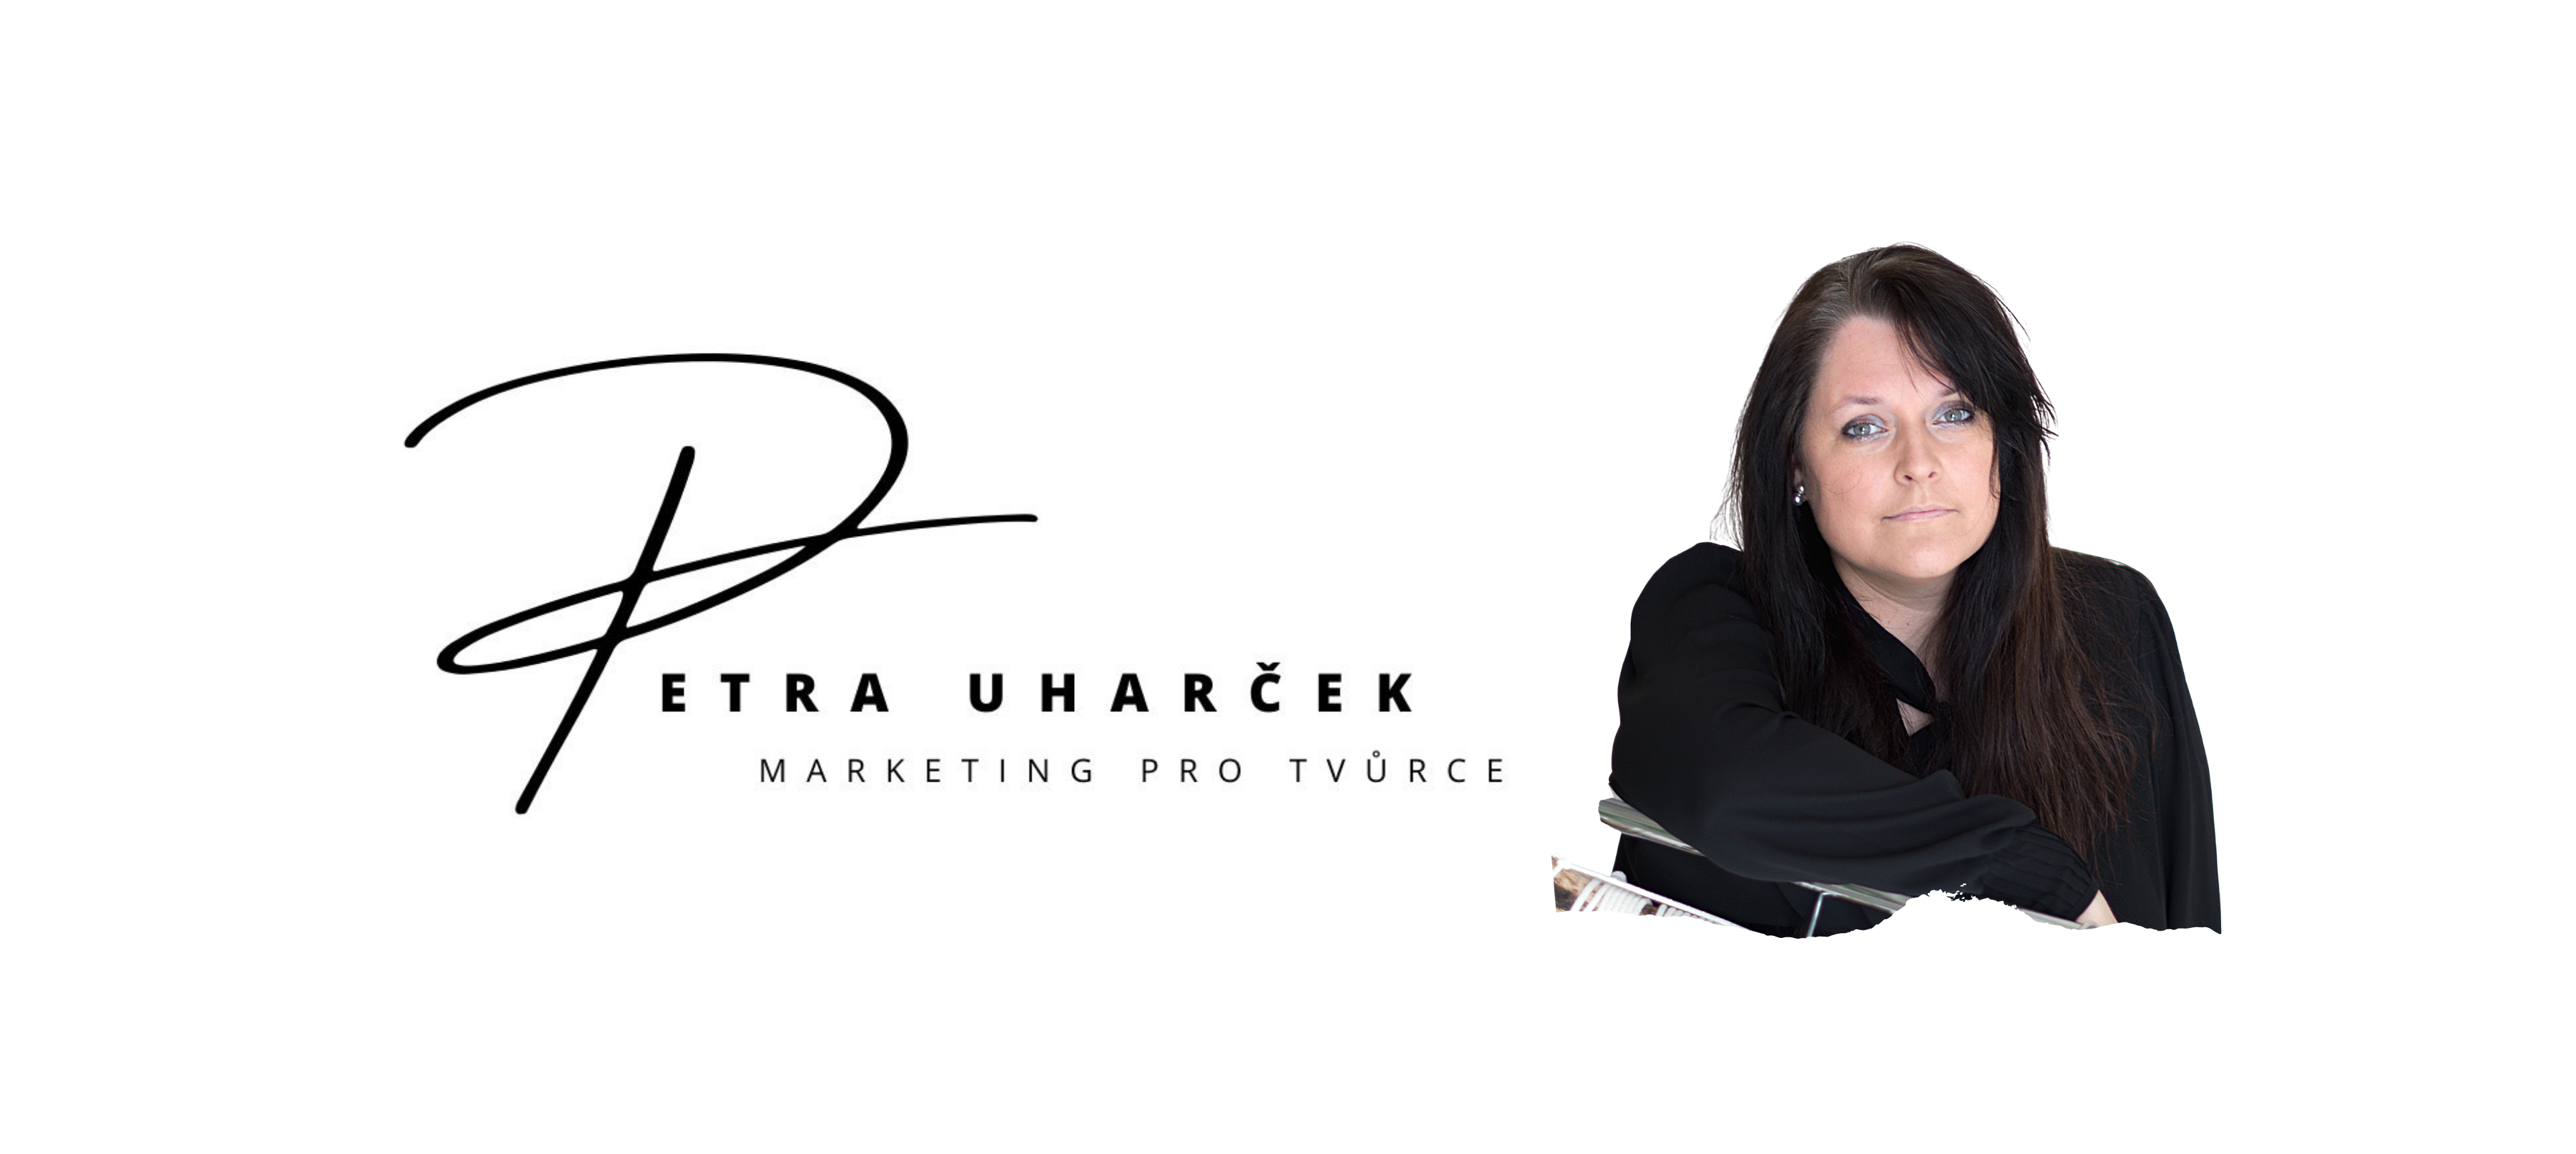 Petra Uharček Marketing, Business mentoring